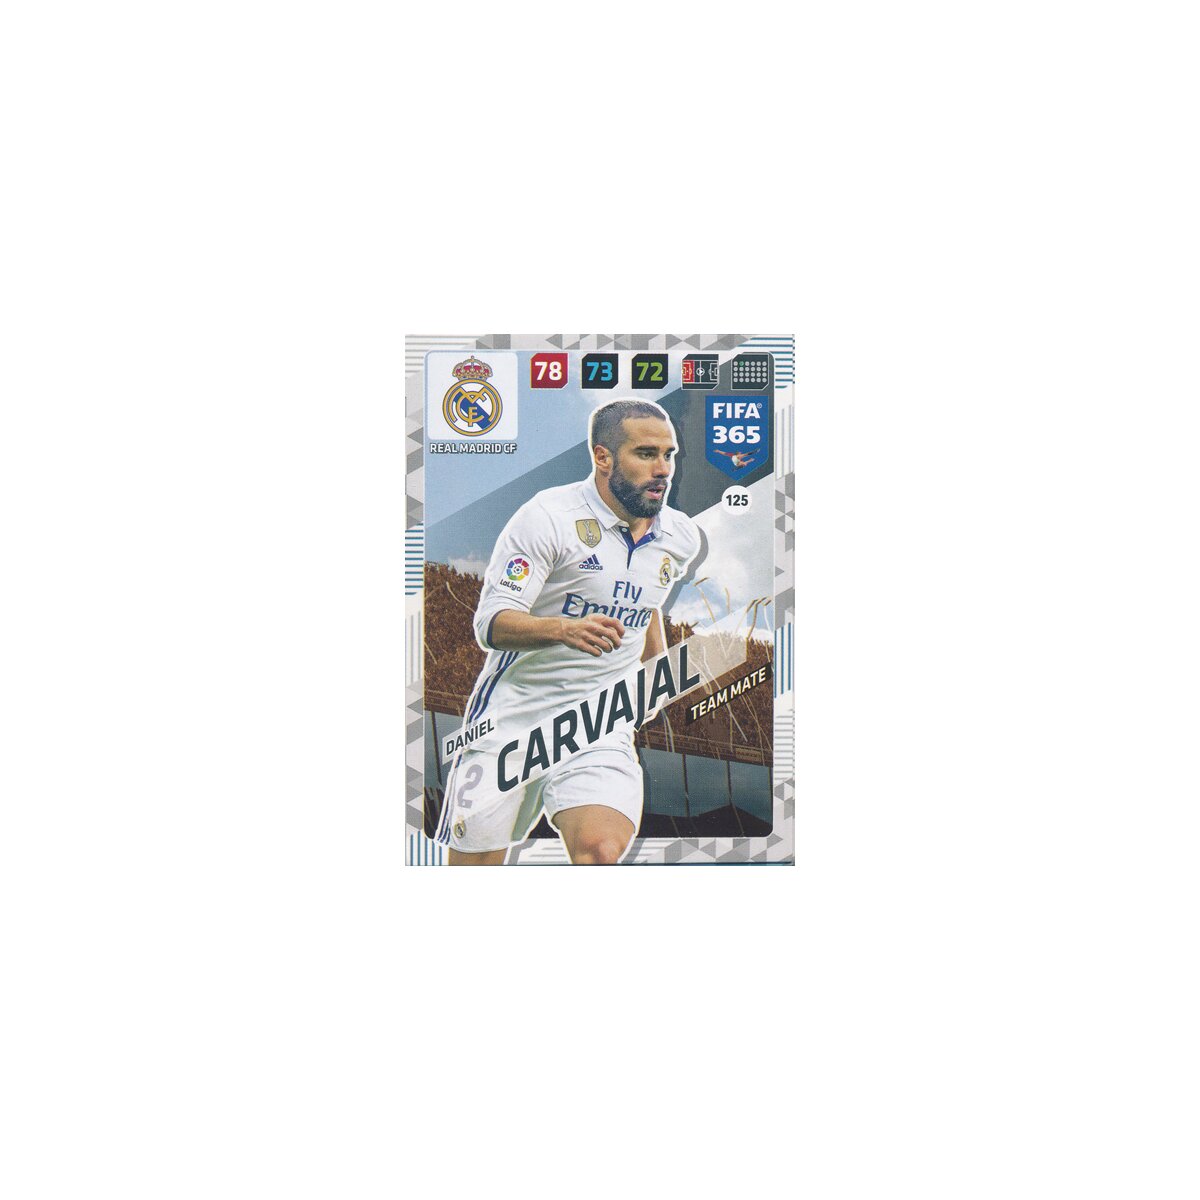 Fifa 365 Cards 2018 125 Daniel Carvajal Real Madrid Cf 0 39